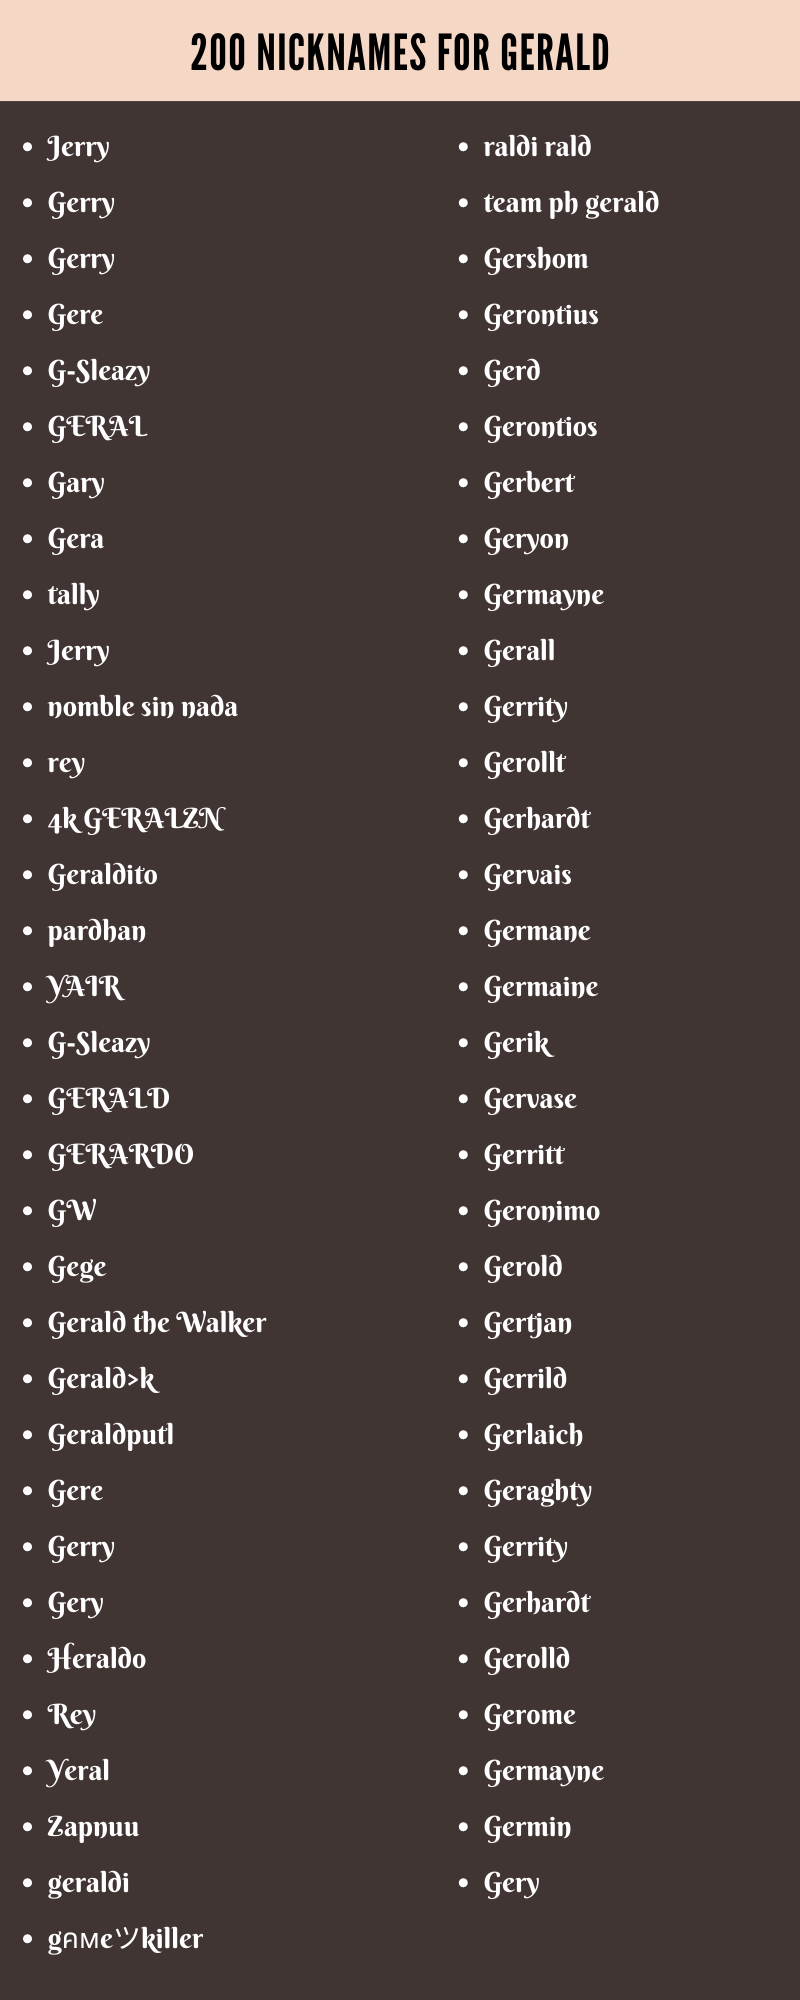 nicknames for gerald